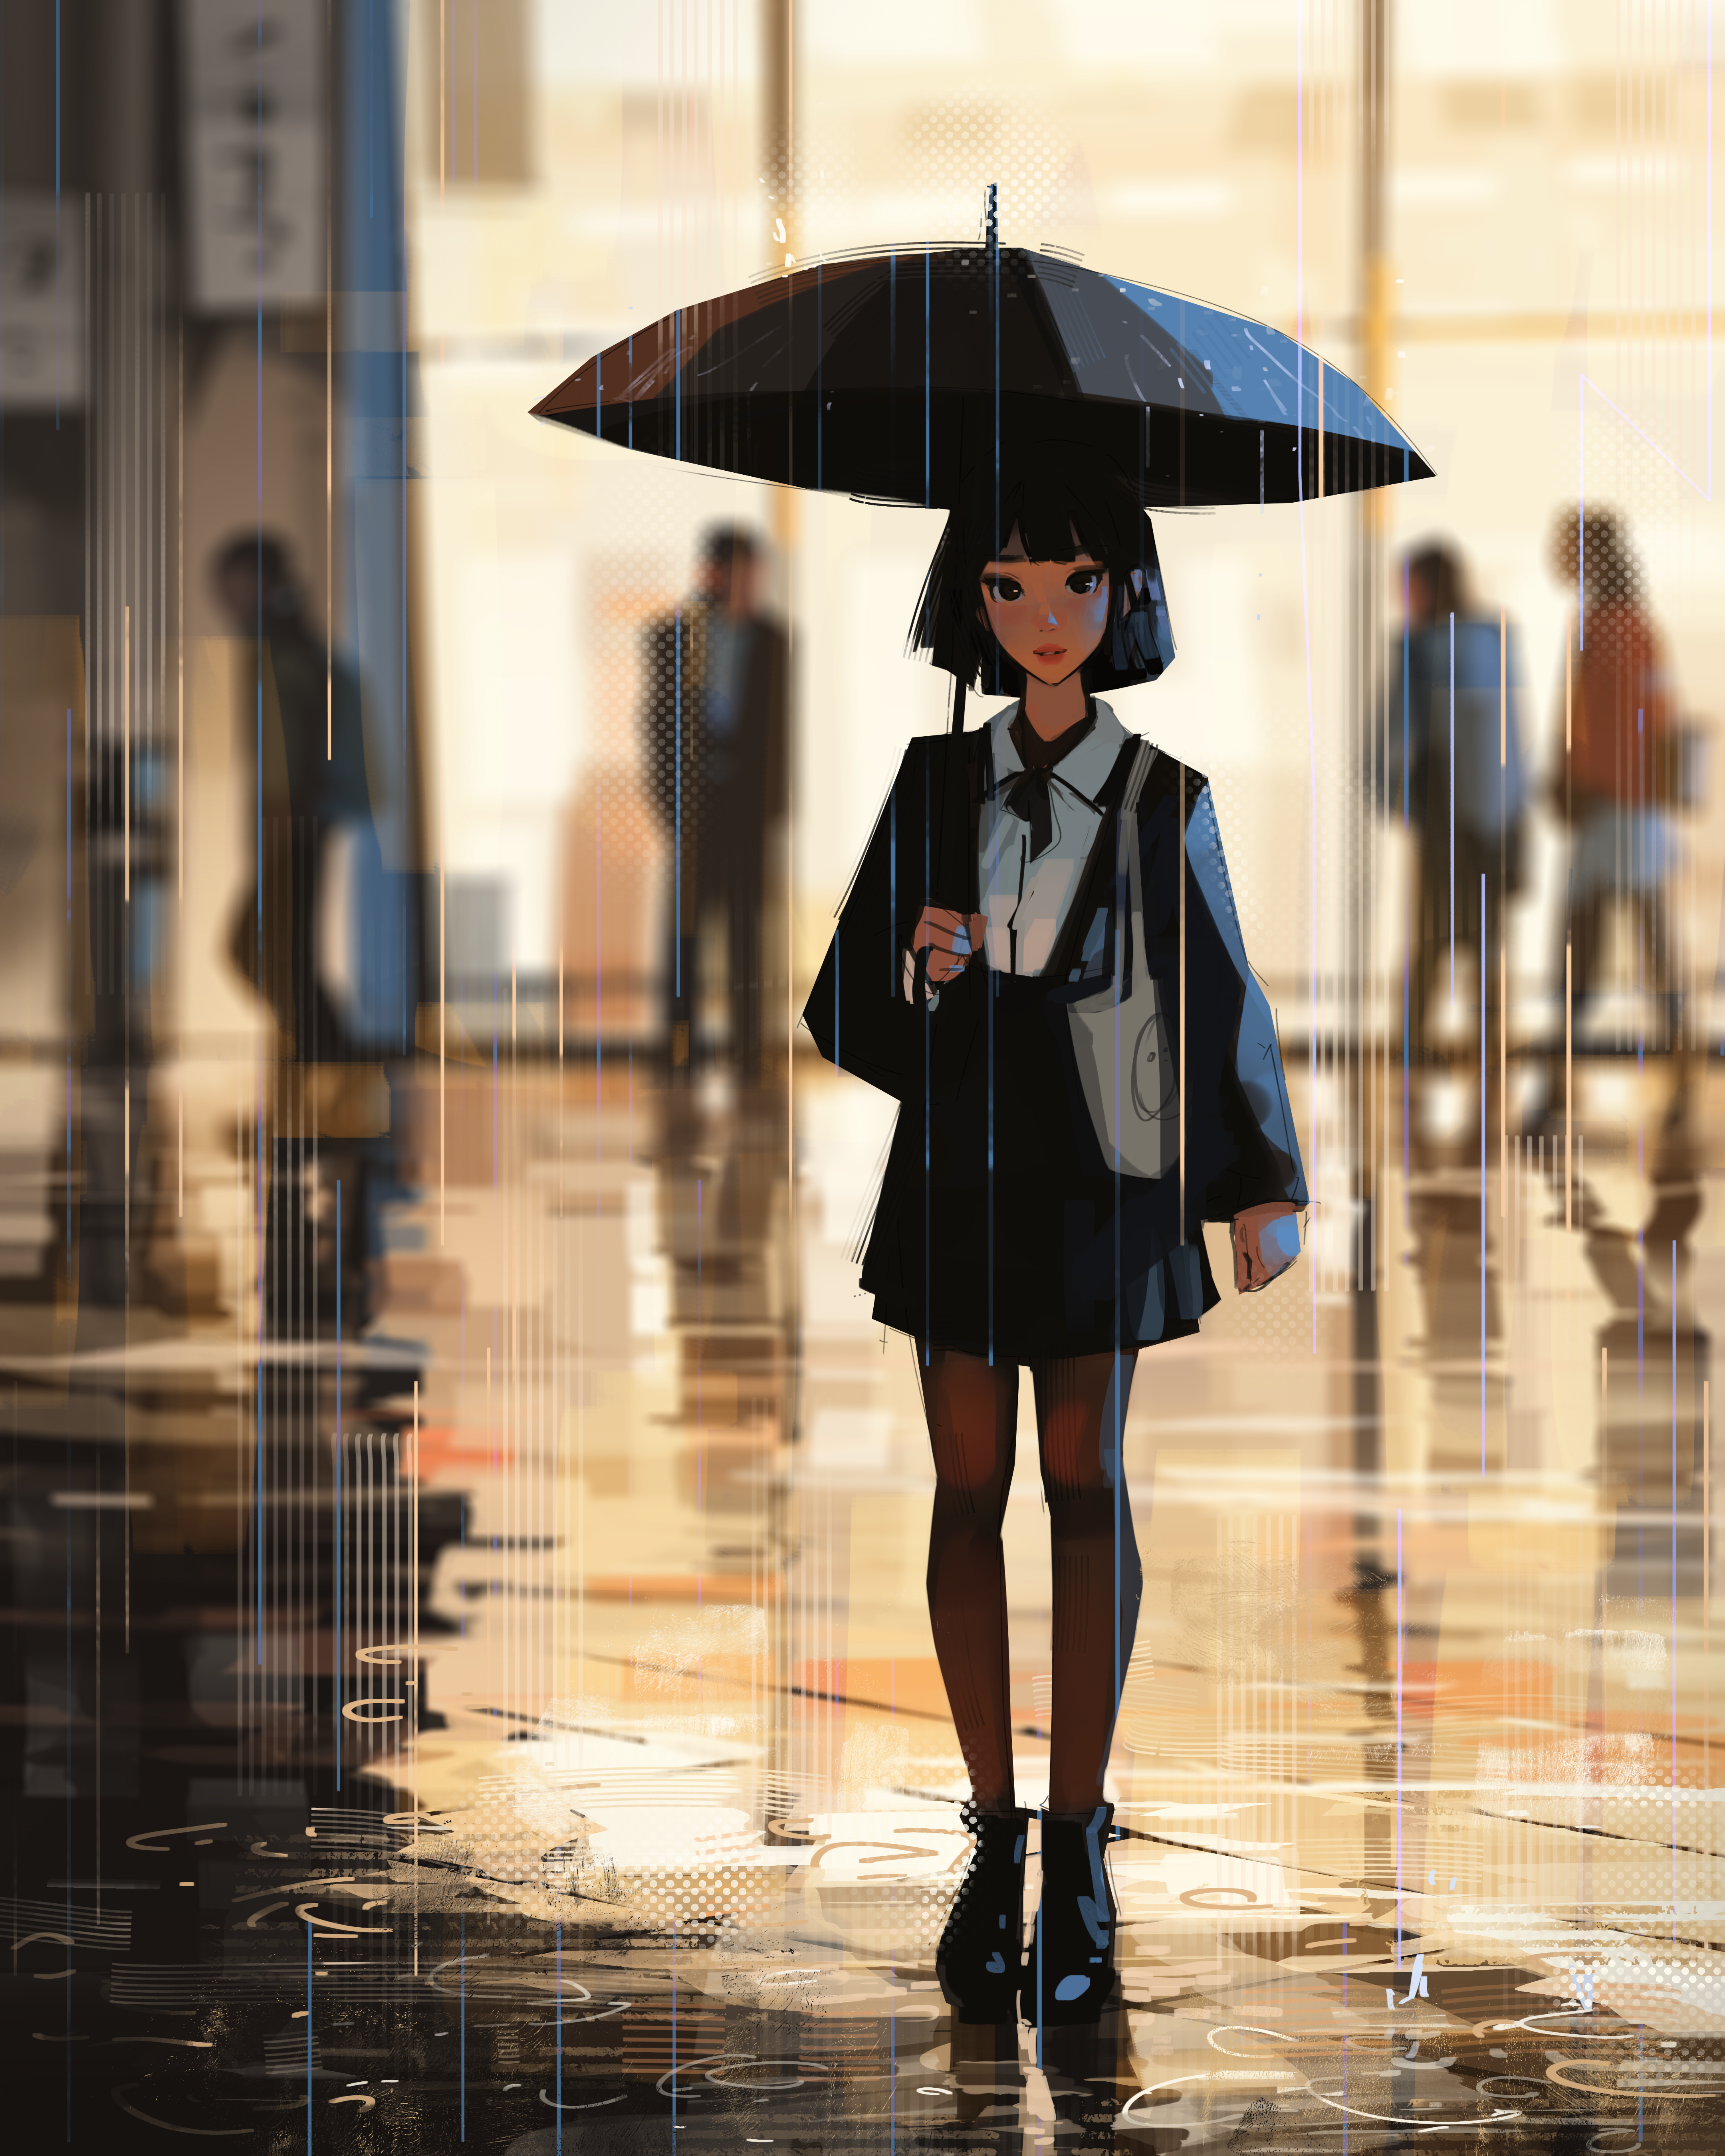 General 4320x5400 Sam Yang digital art artwork illustration women portrait rain looking at viewer umbrella street short hair dark hair skirt reflection blurry background painting anime